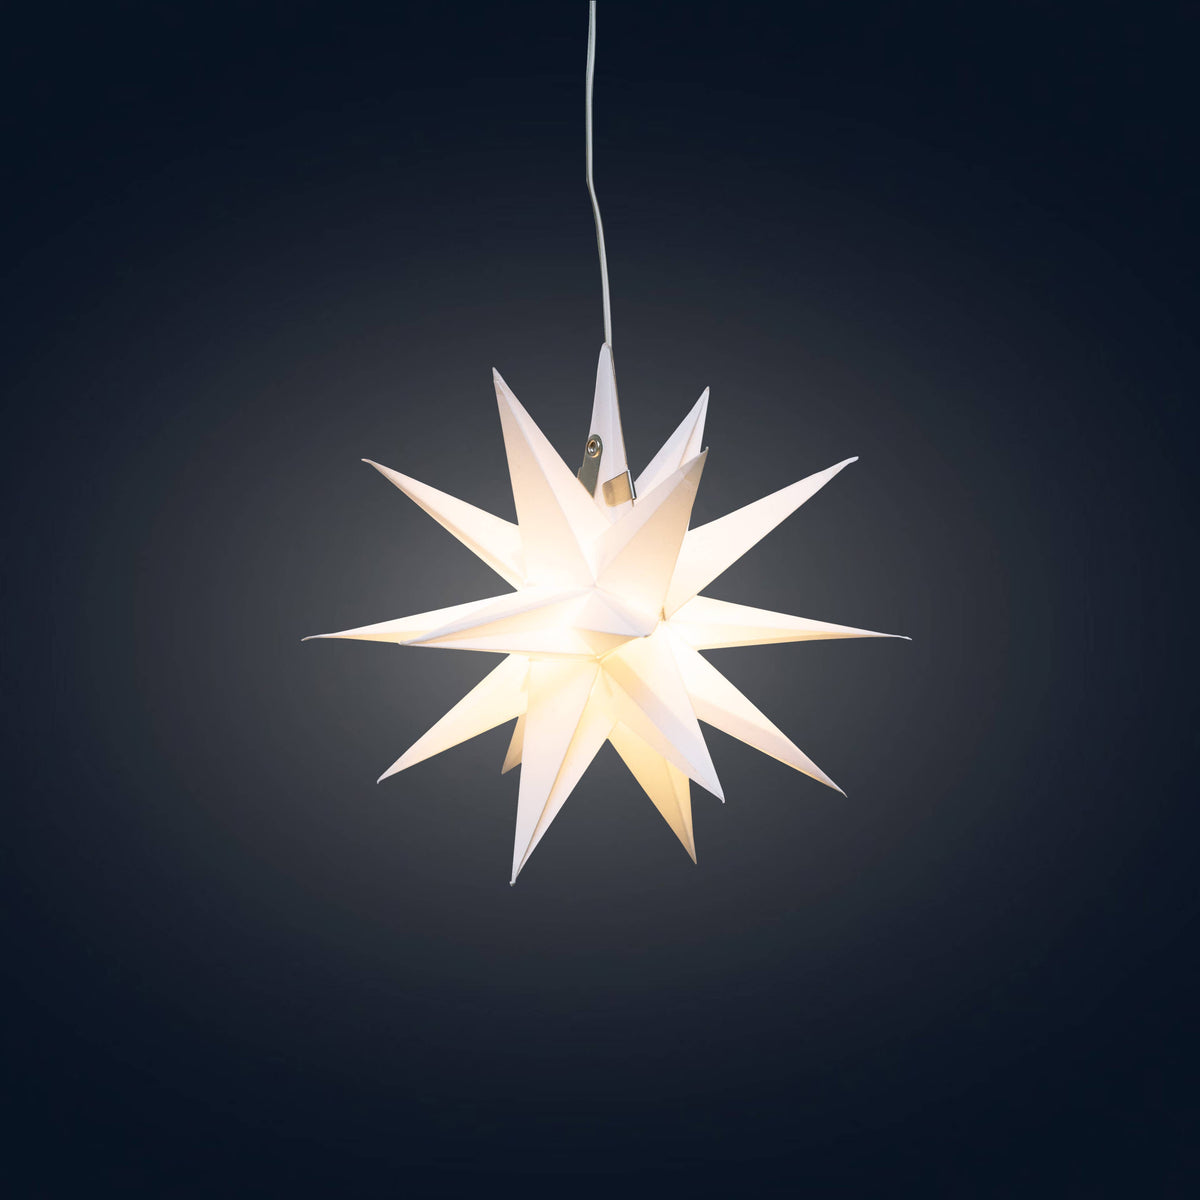 STAR Moravian Mini Star ~ 7 inch, White Paper Star Lantern Light